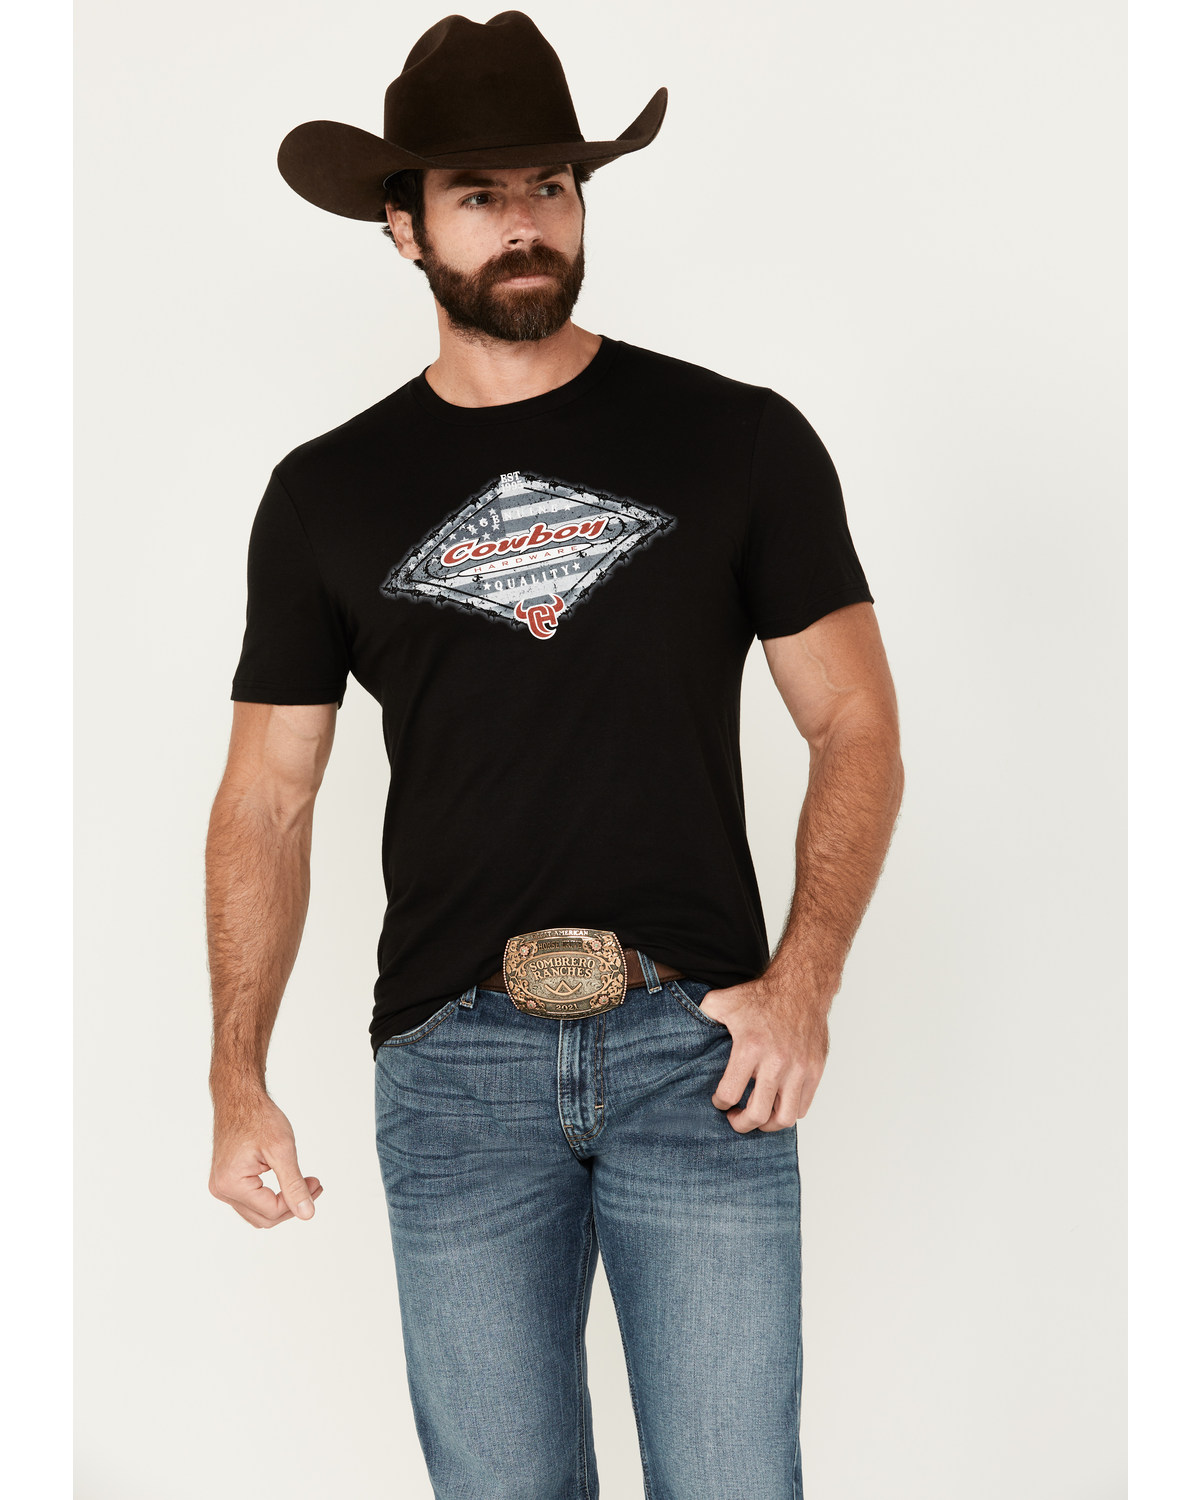 Cowboy Hardware Men's Genuine Quality Flag Short Sleeve T-Shirt